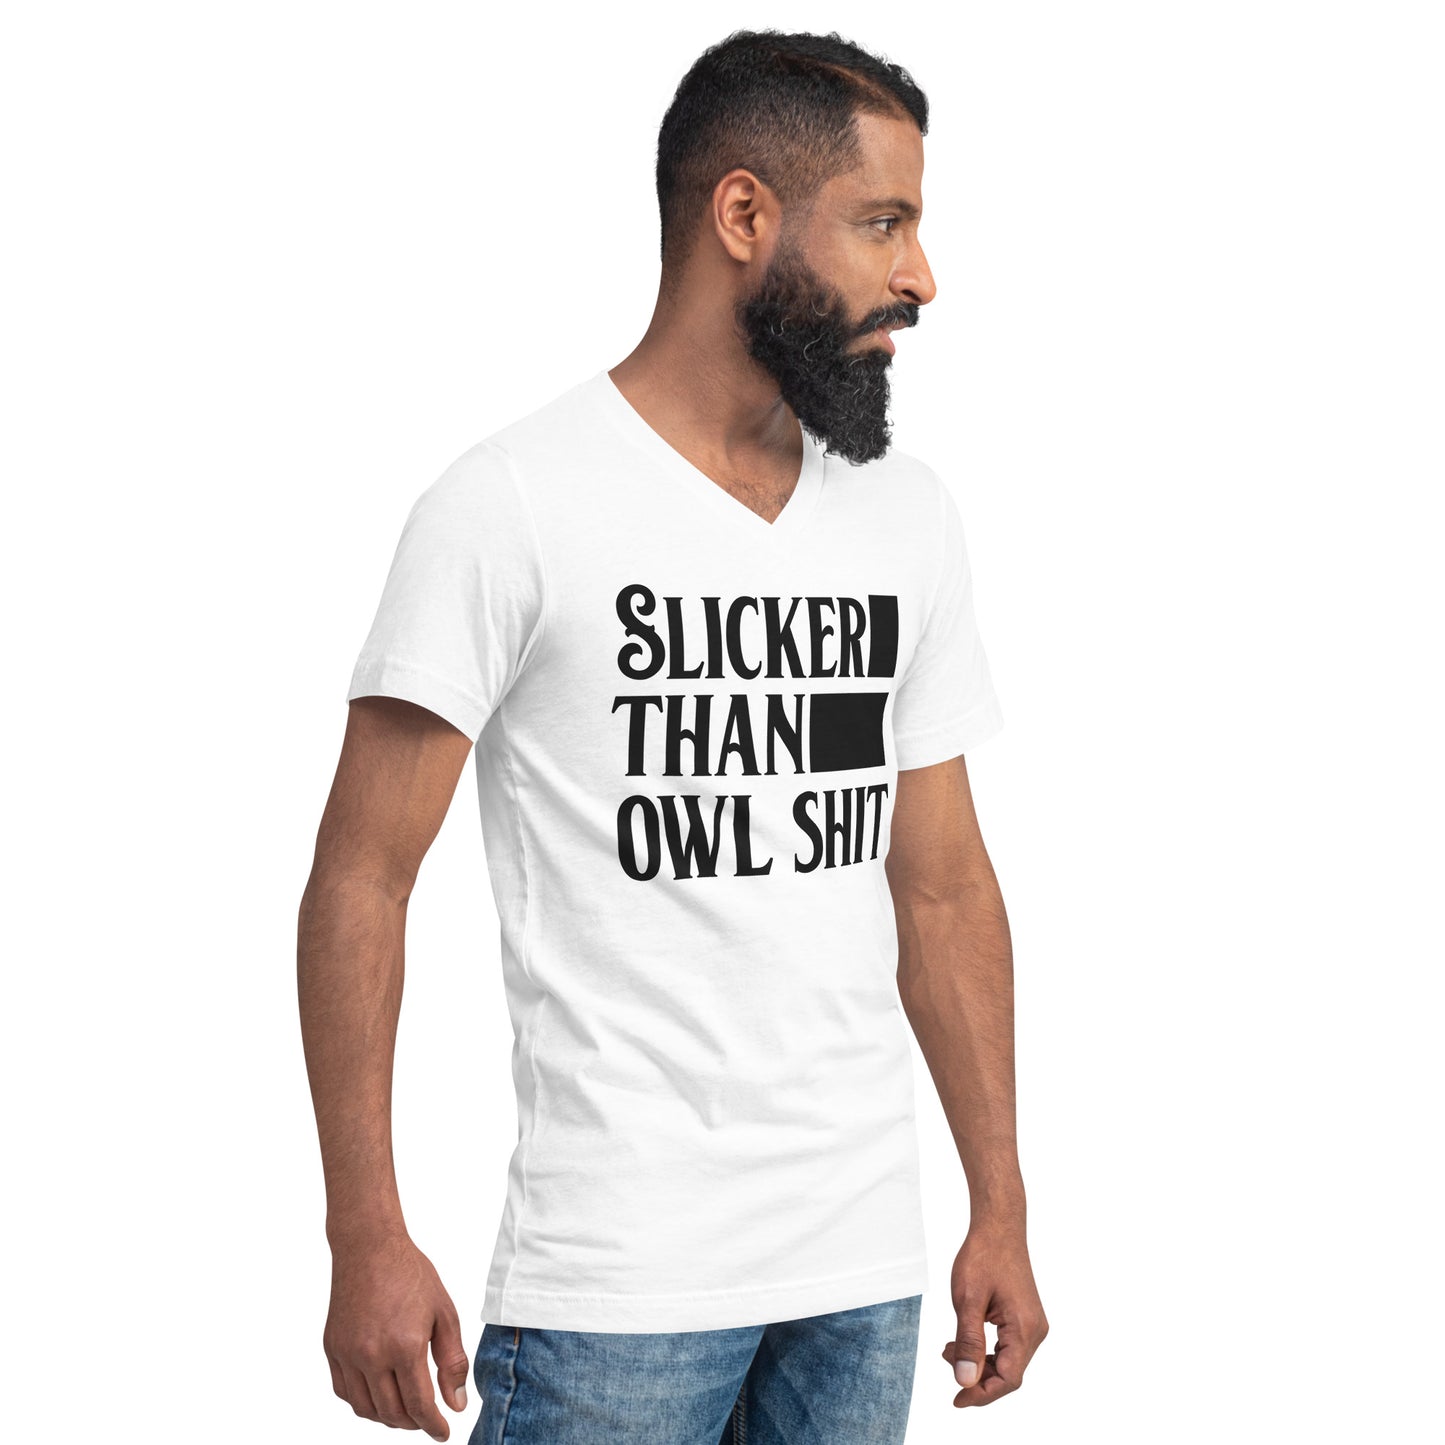 Slicker than Owl Shit / V-Neck T-Shirt